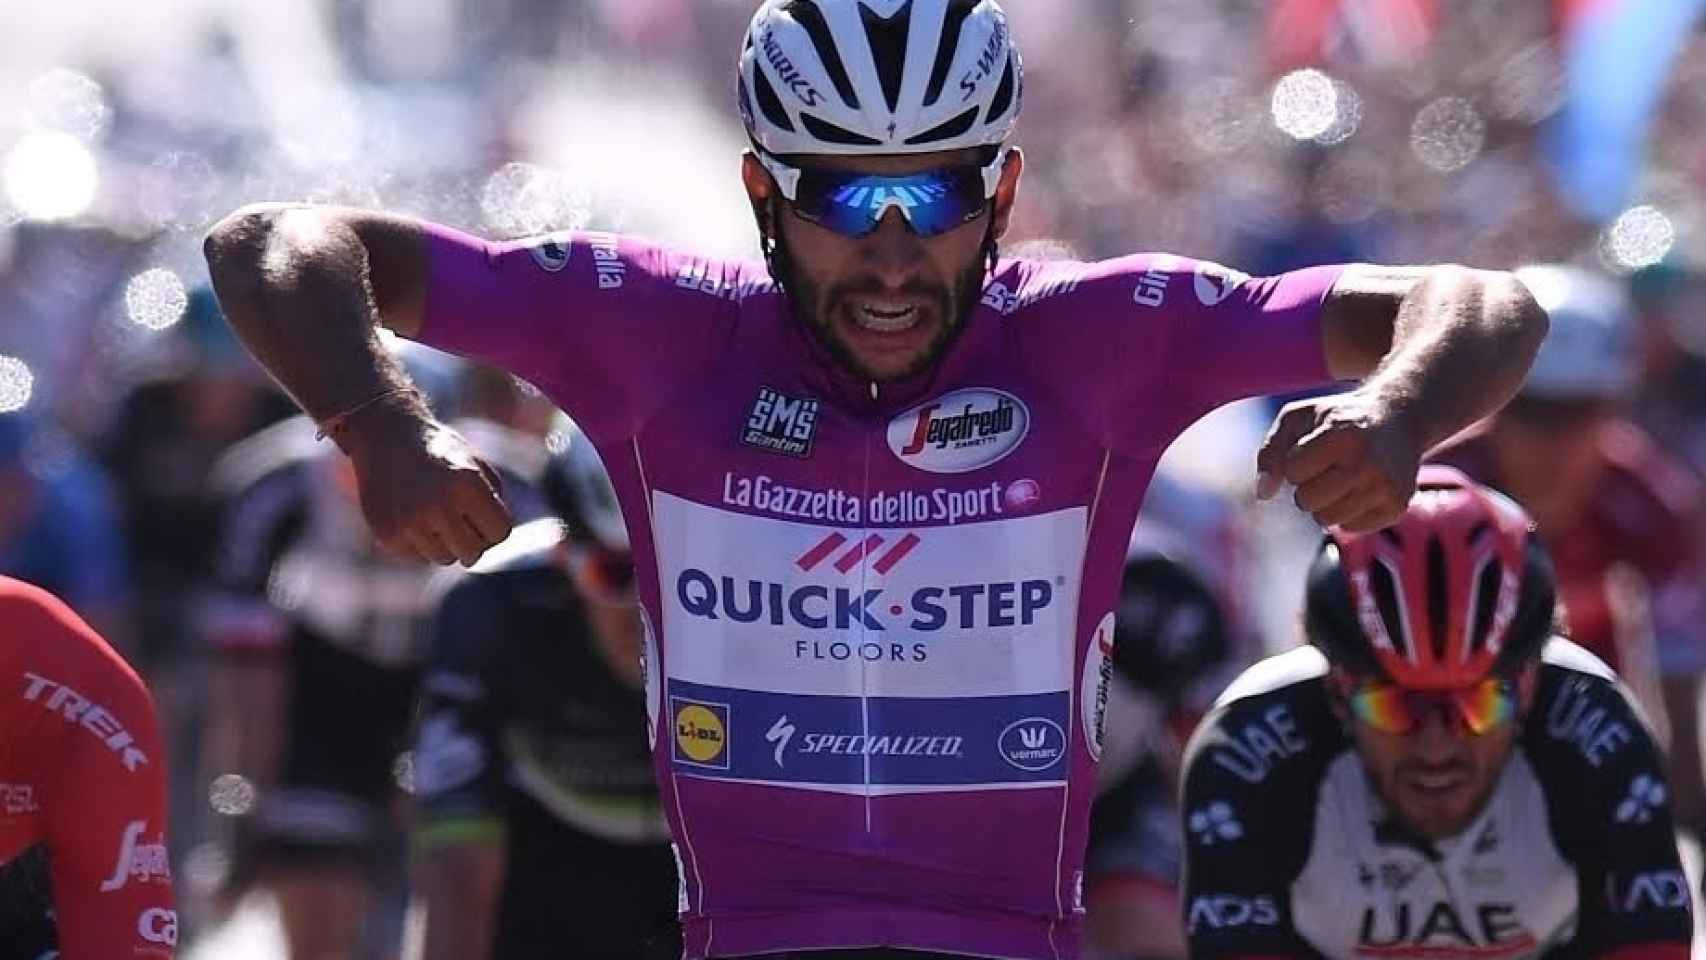 Fernando Gaviria con la maglia ciclamino del Giro de Italia durante su etapa en Quick Step